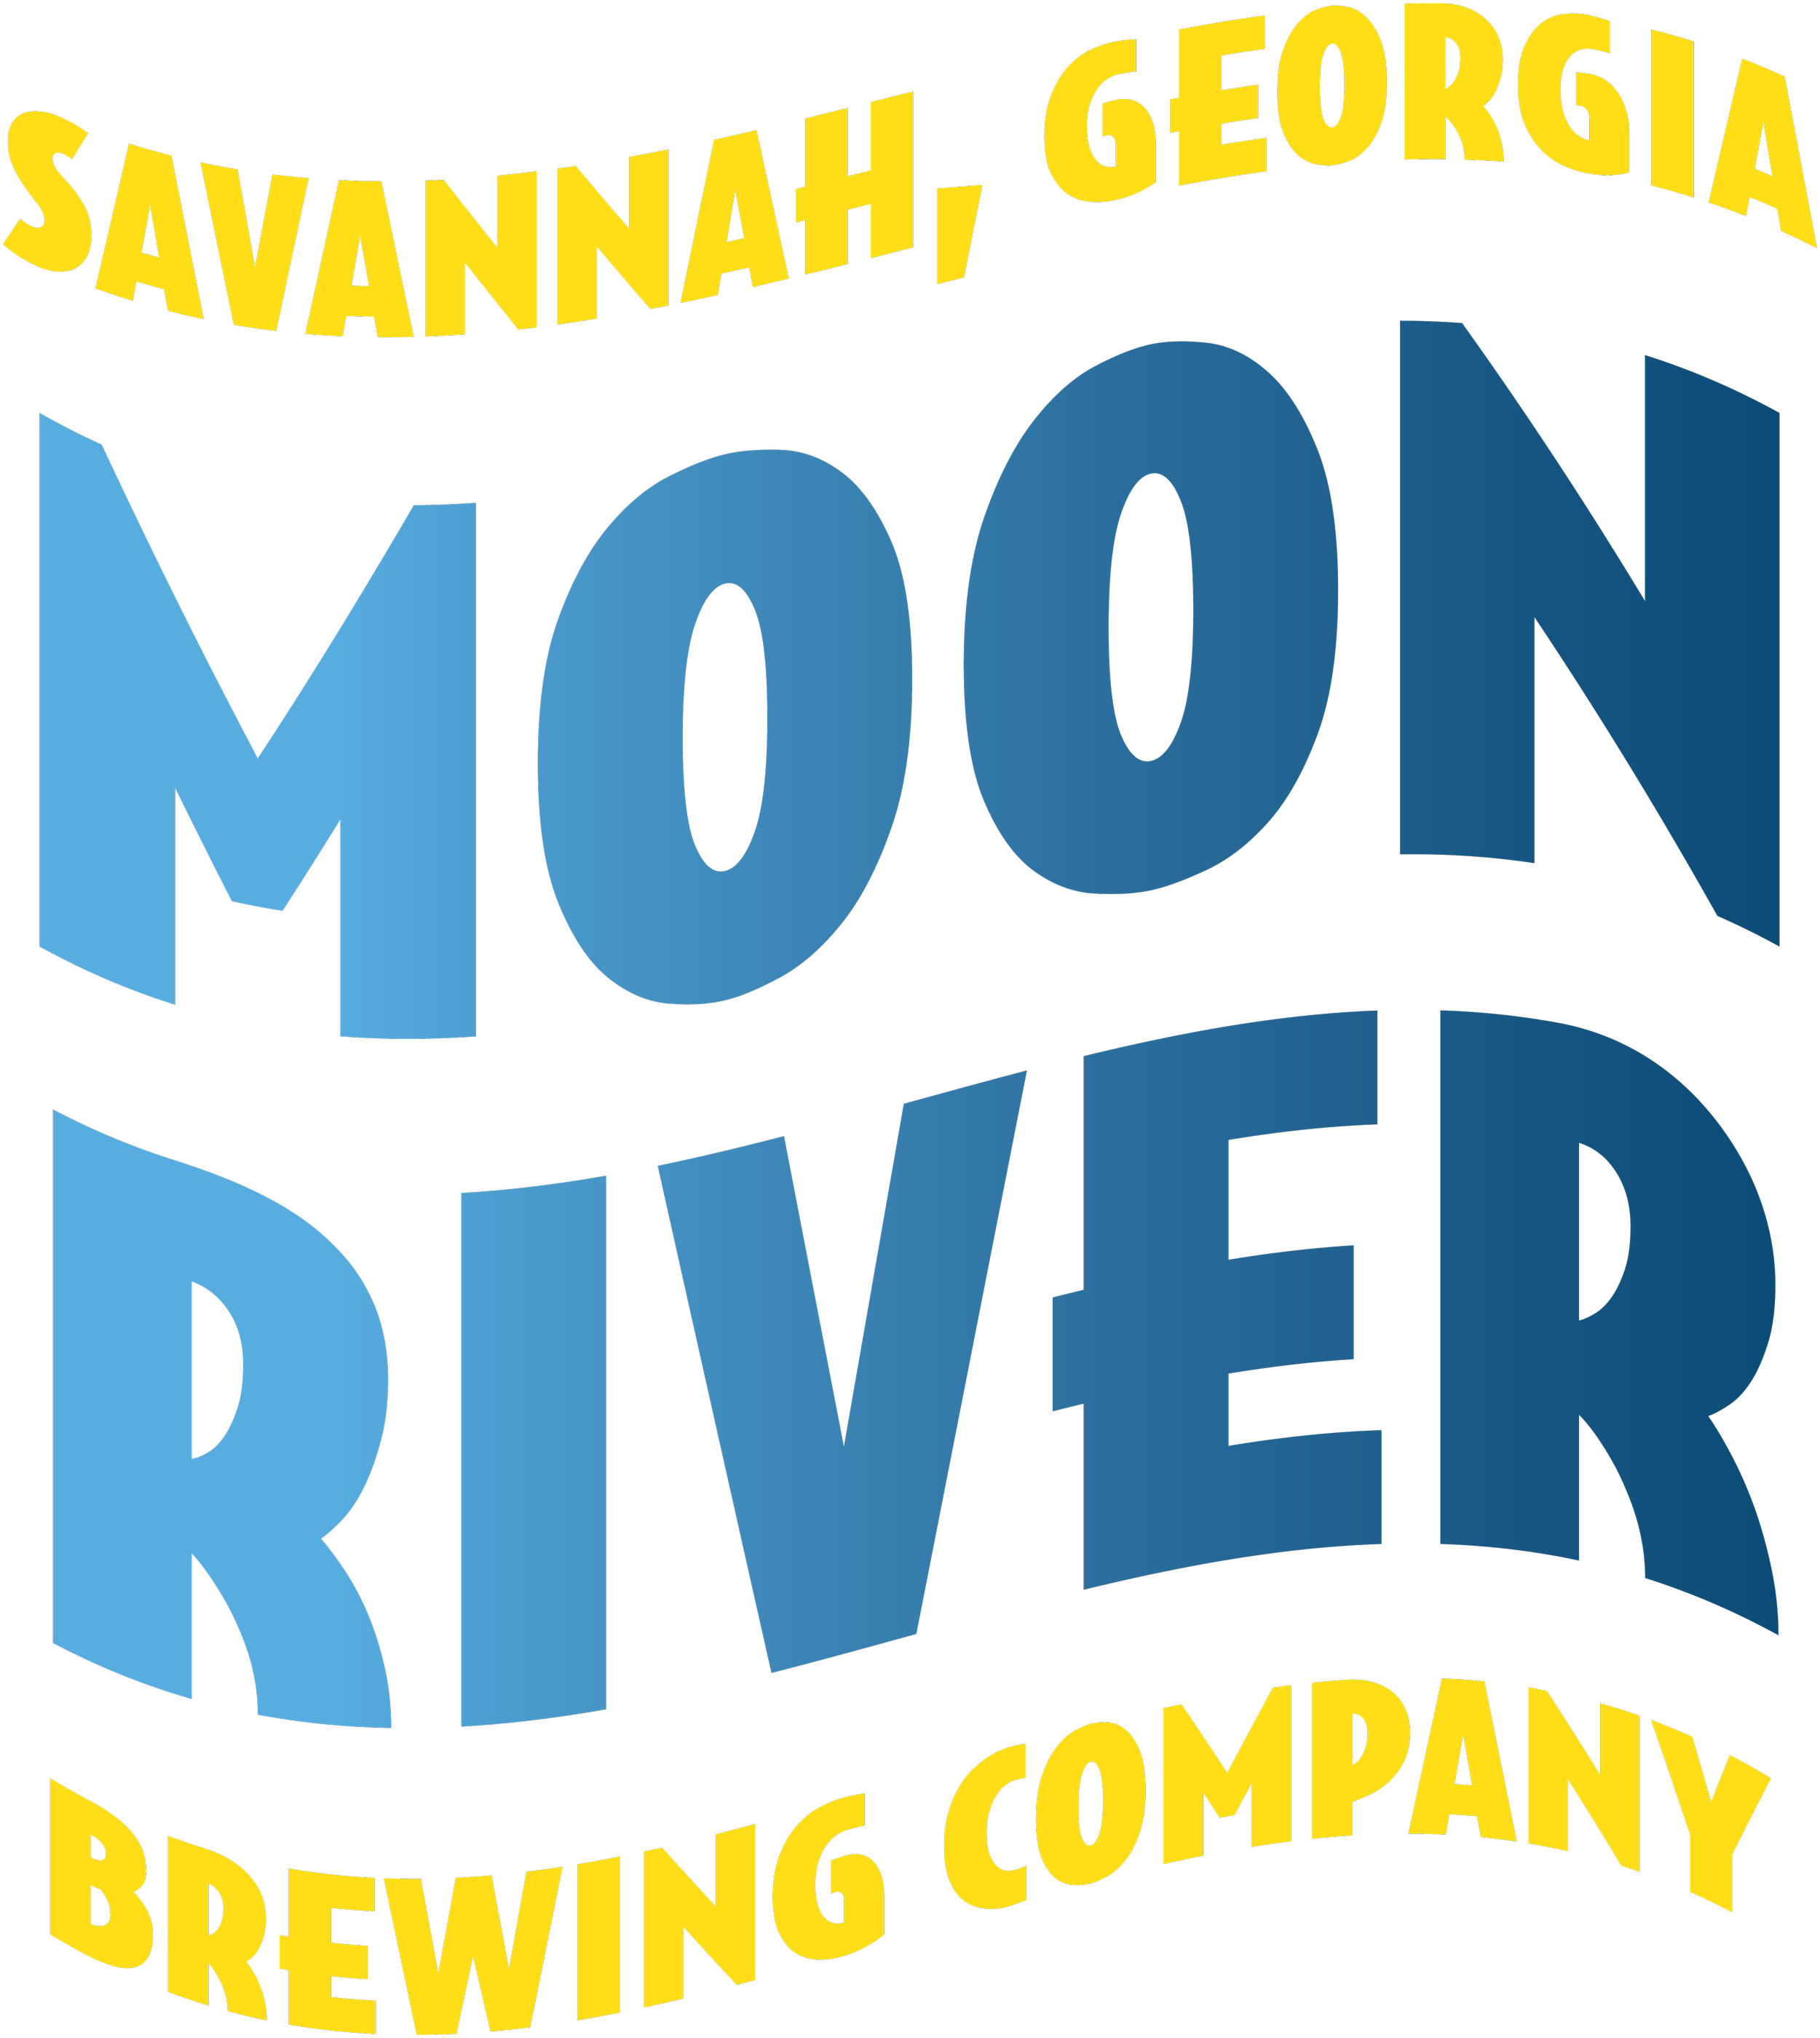 Moon River Brewing Company